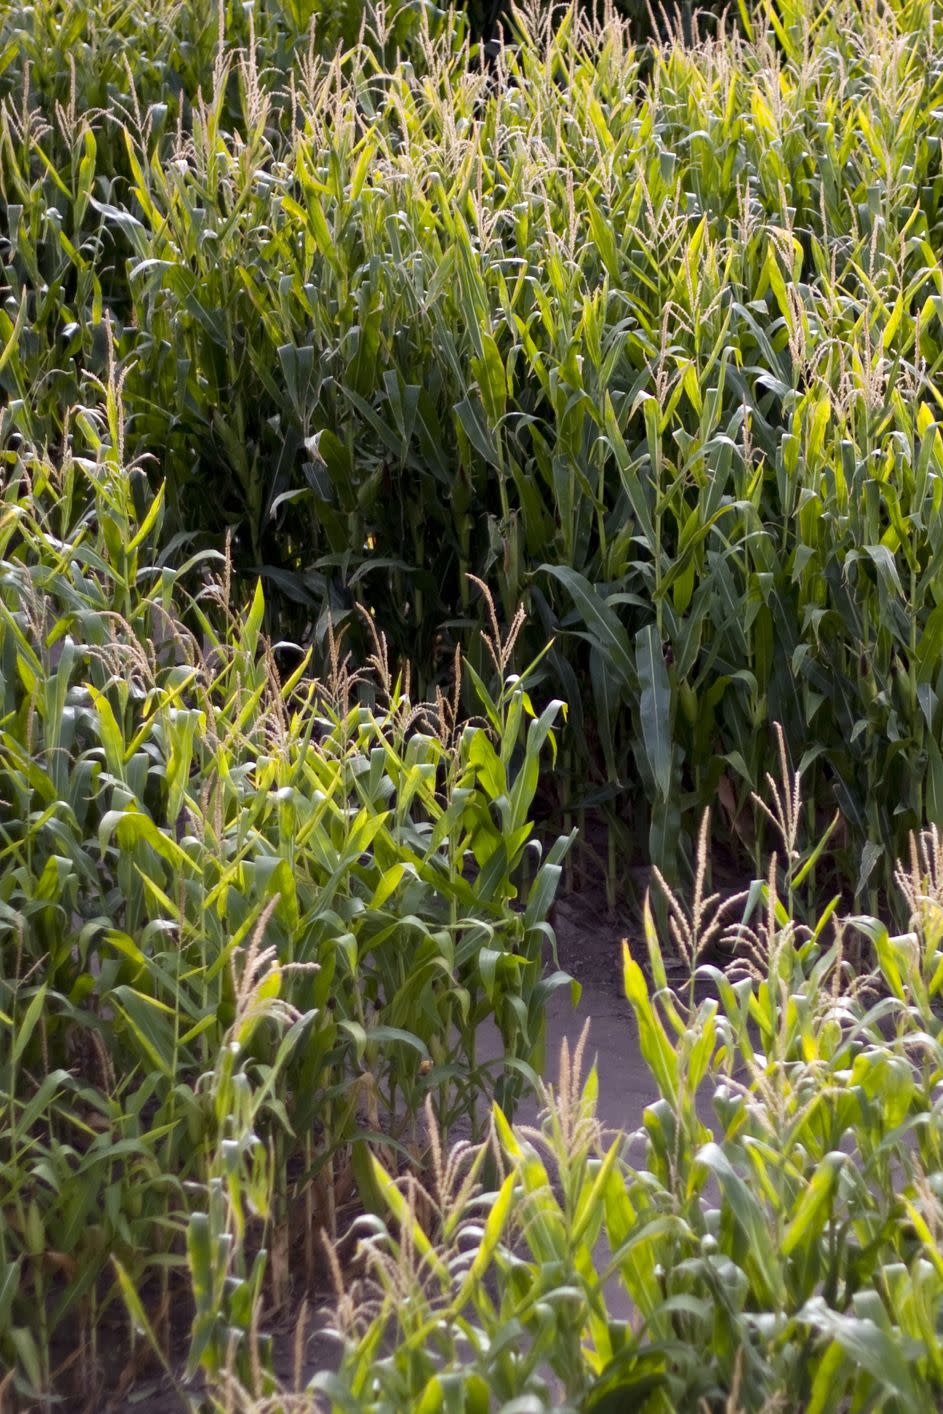 29) Rutledge Corn Maze in Olympia, Washington